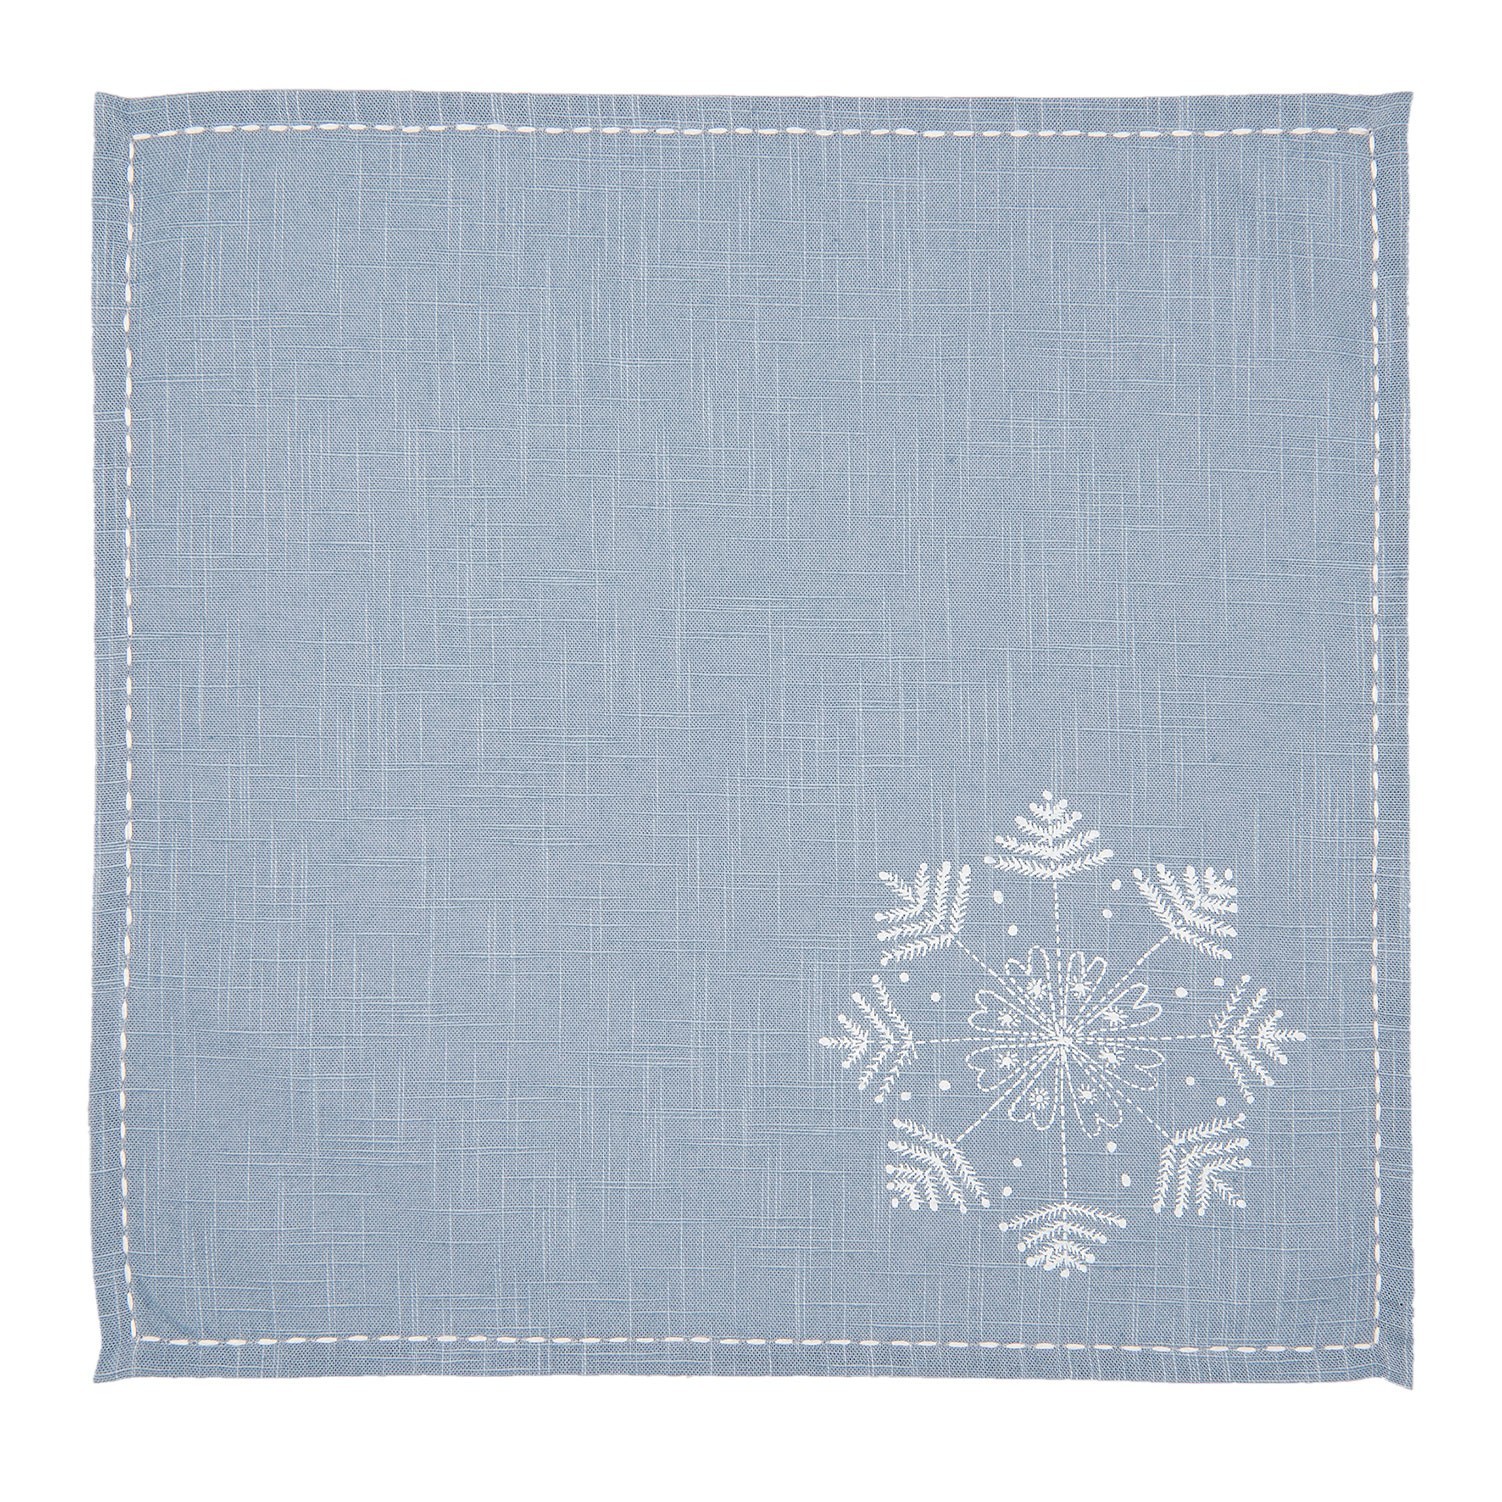 Textilní ubrousek Winter Wishes - 40*40 cm - sada 6ks Clayre & Eef